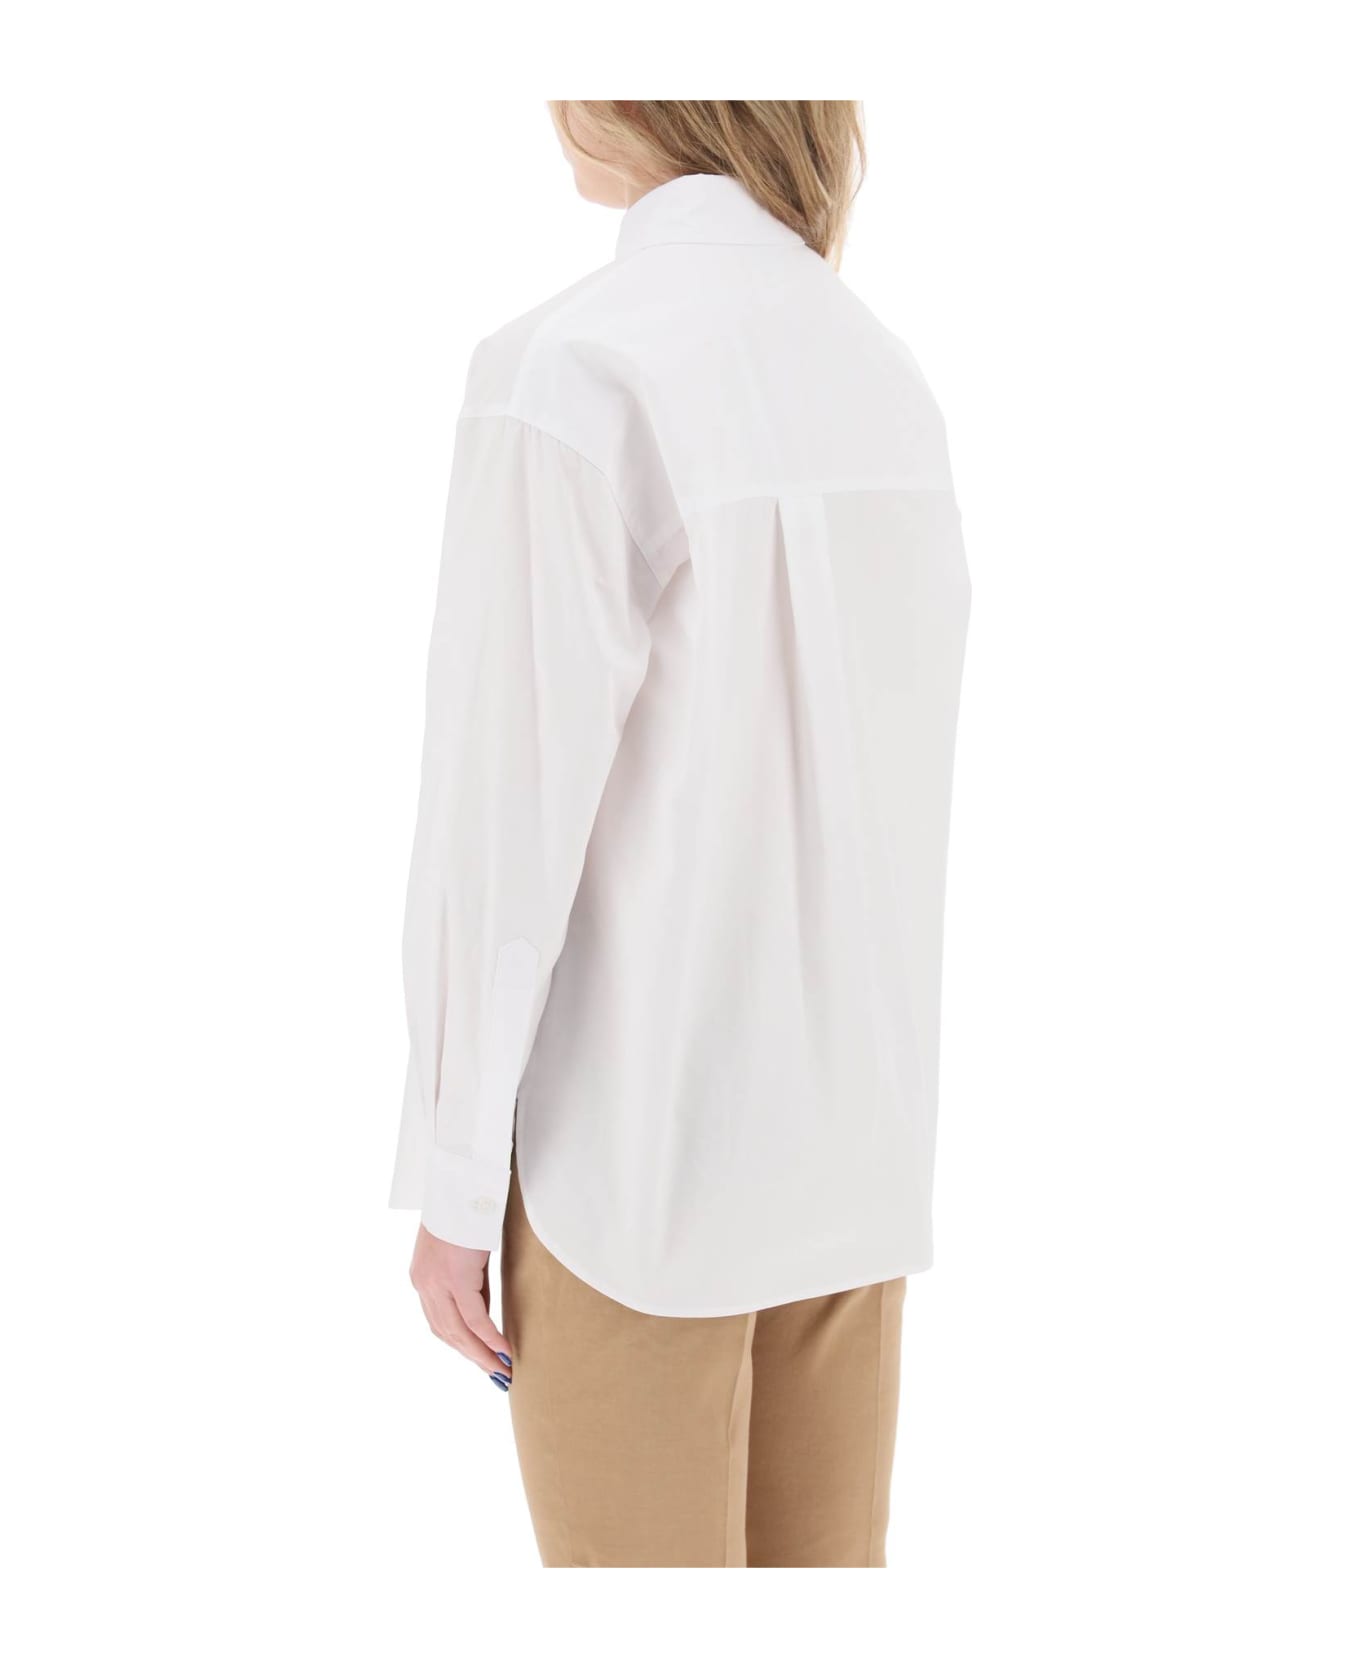 Pinko Cotton Popeline Shirt - BIANCO BRILLANTE (White)